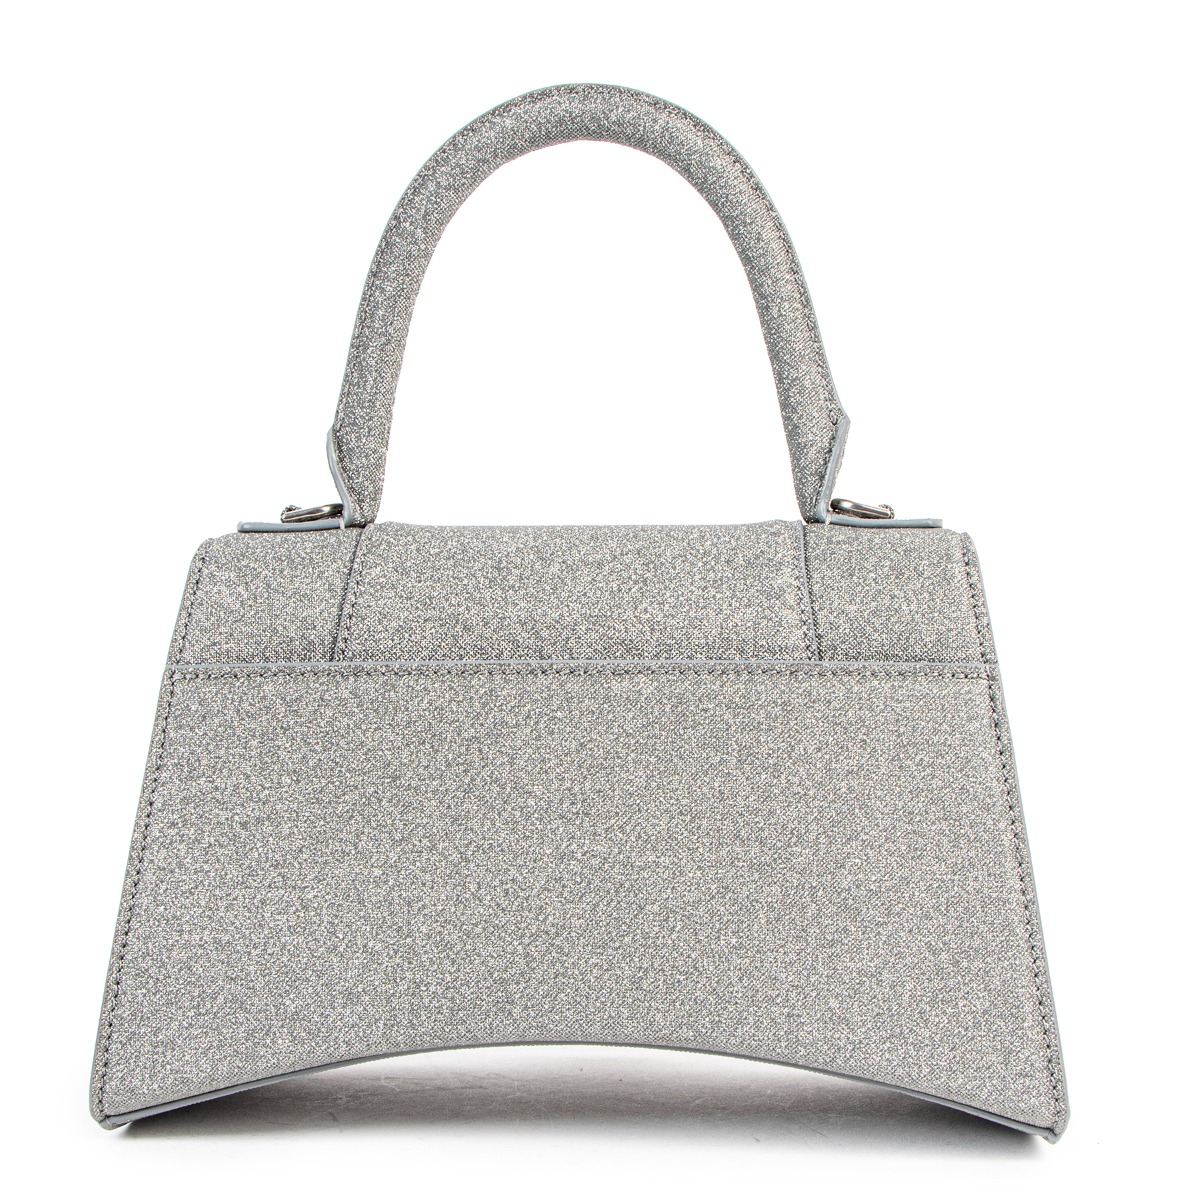 Balenciaga Mini Glitter Hourglass Bag